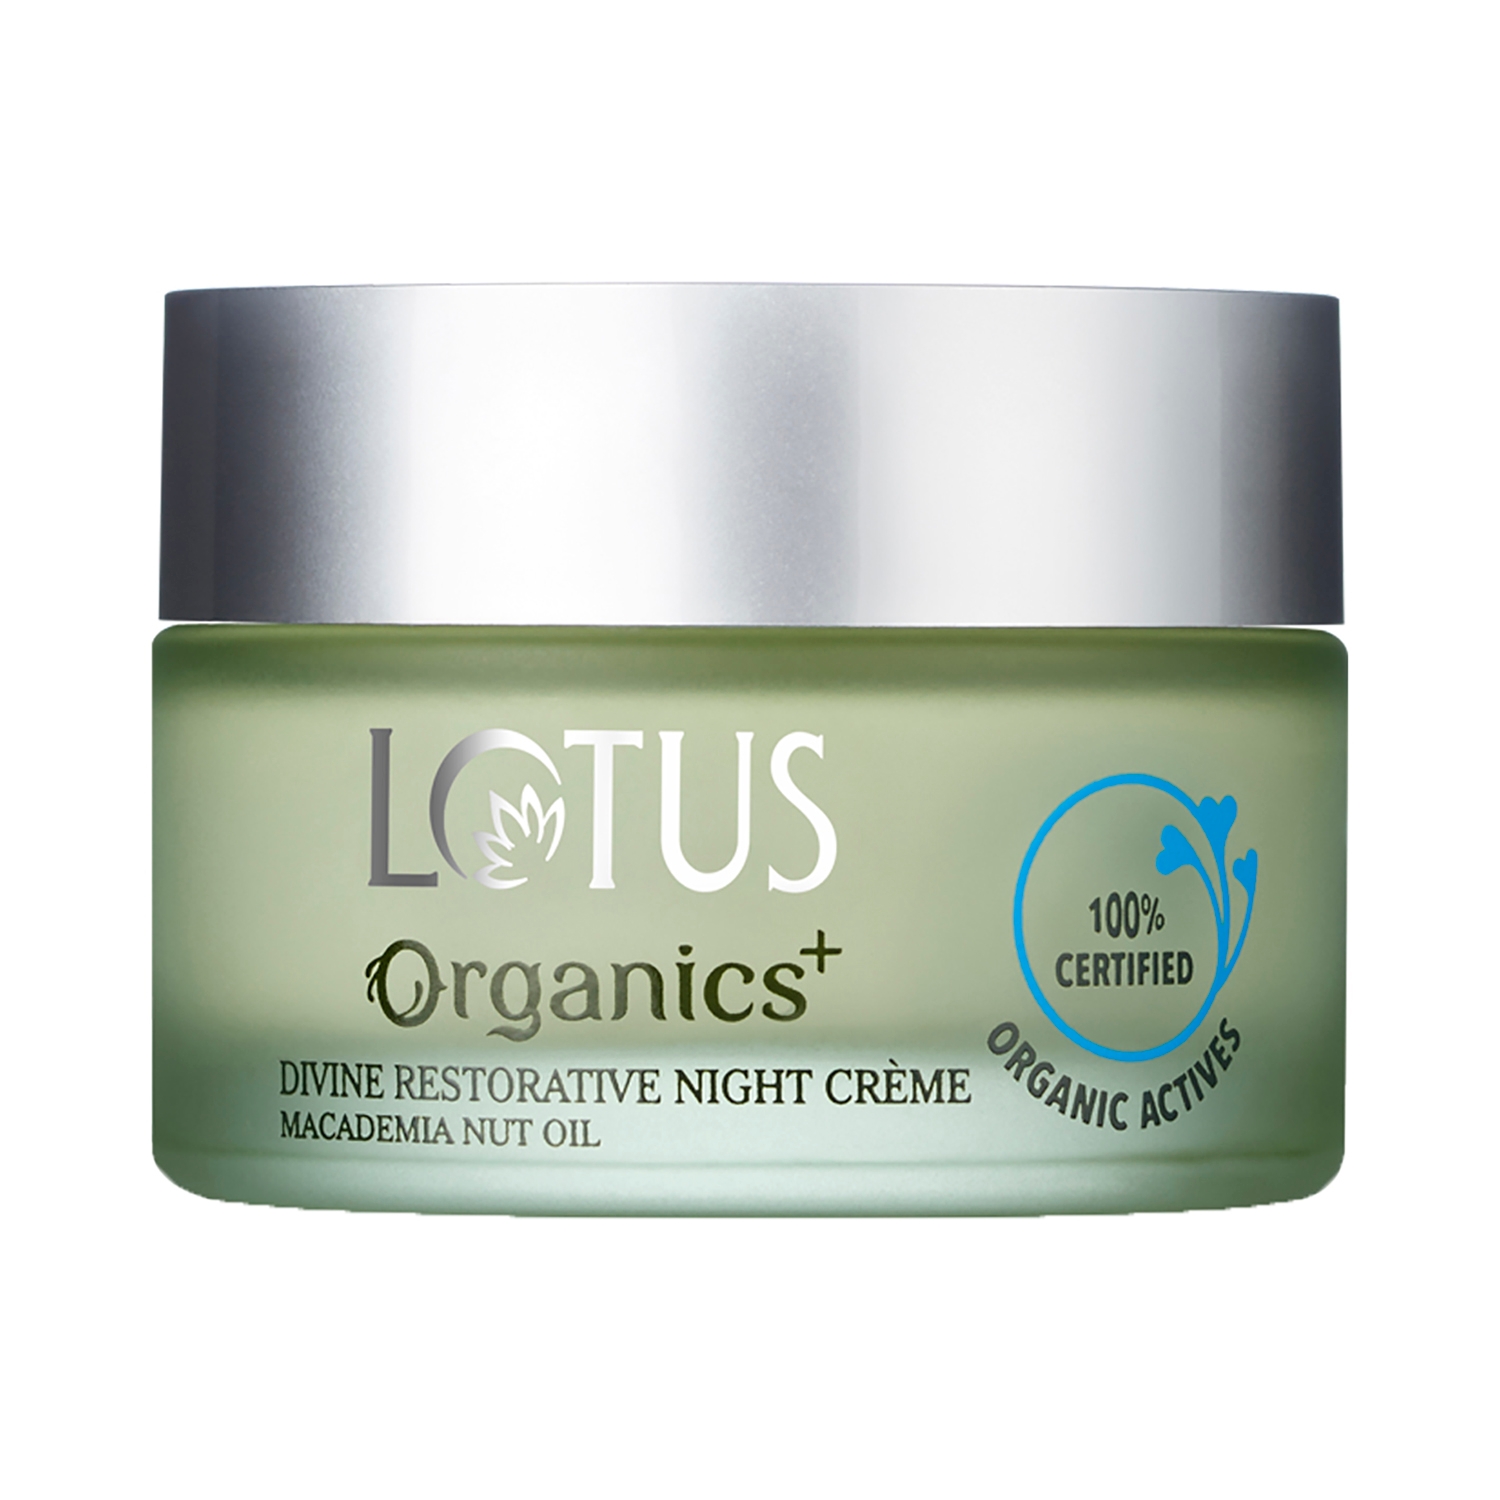 Lotus Organics | Lotus Organics Divine Restorative Night Creme (50g)